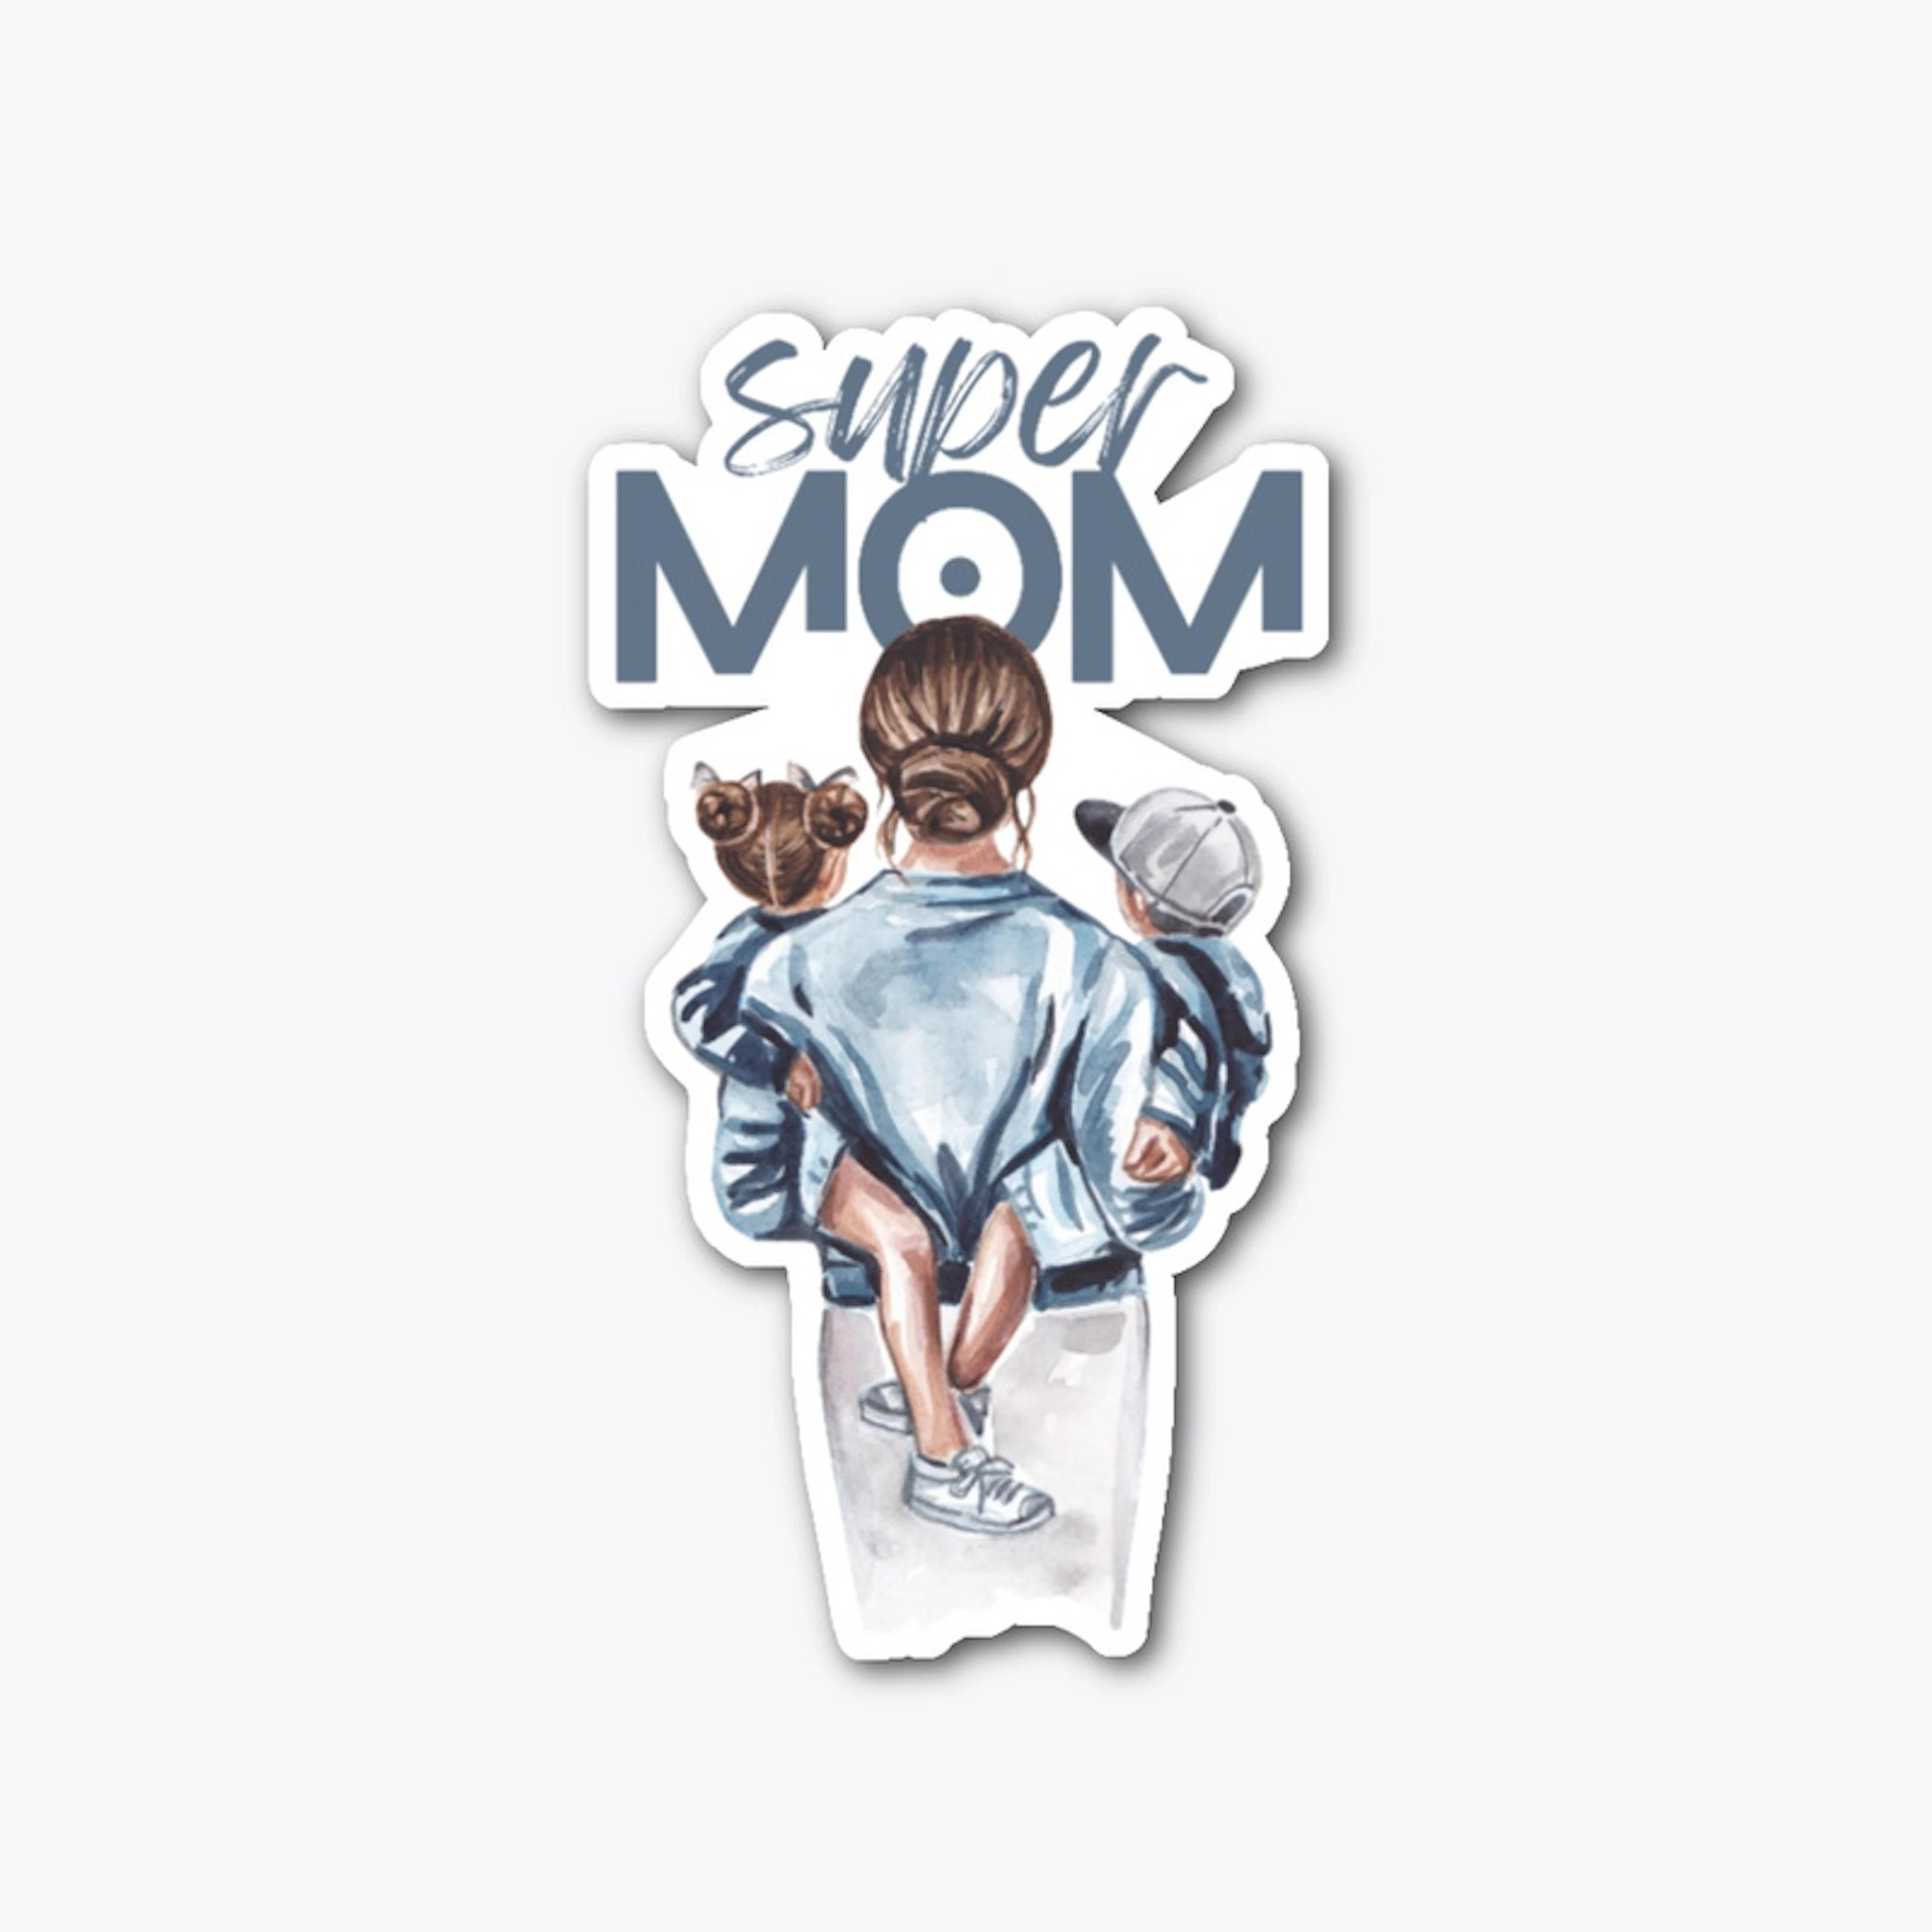 Super MOM